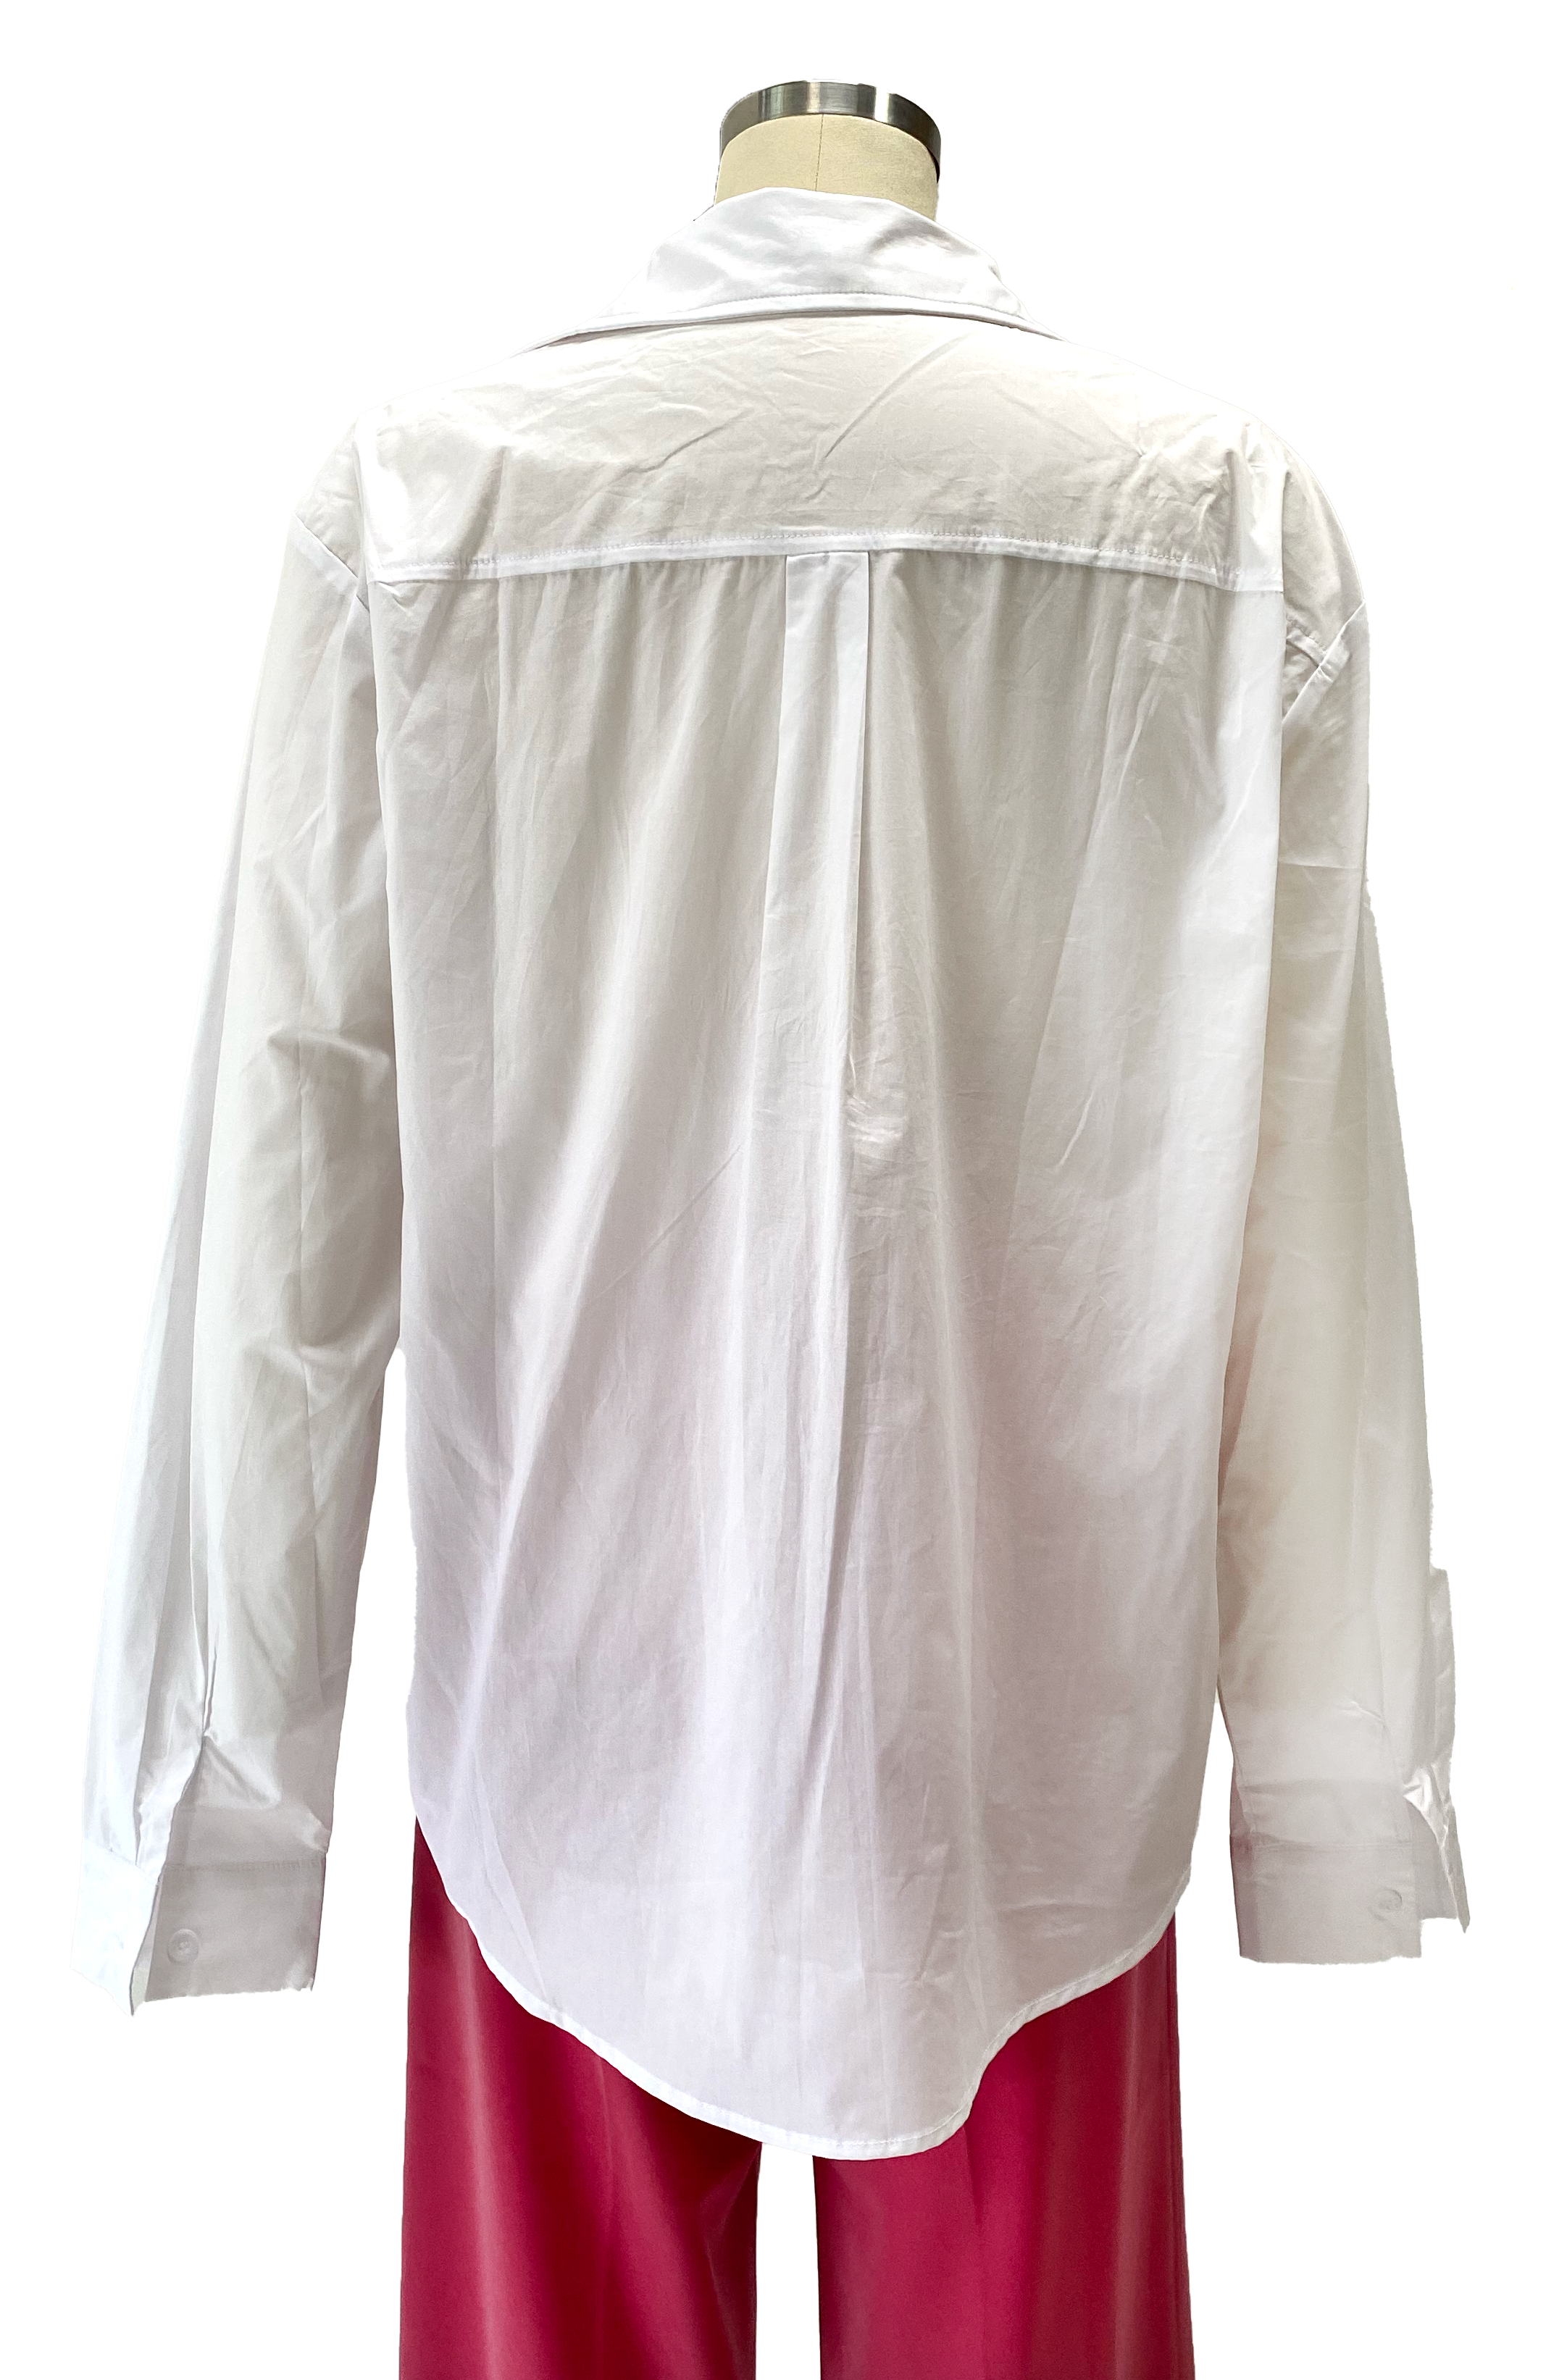 Nuzzle Clothing Shirts & Tops Crisp White Buttondown